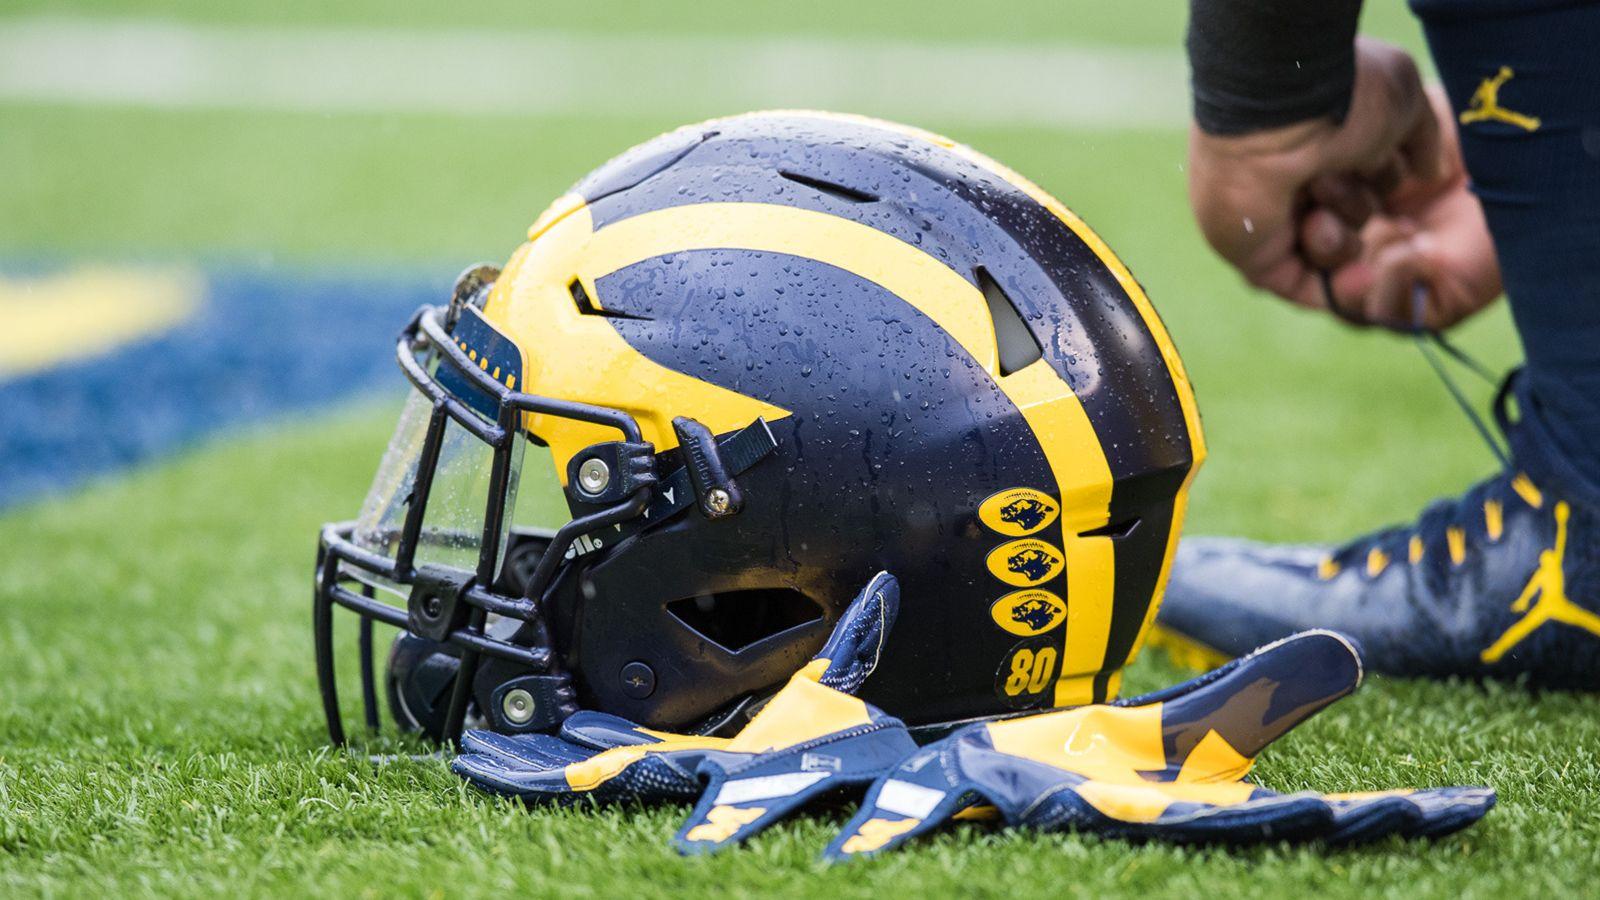 University of Michigan Helmet Logo - Michigan Winged Helmet of Michigan Athletics